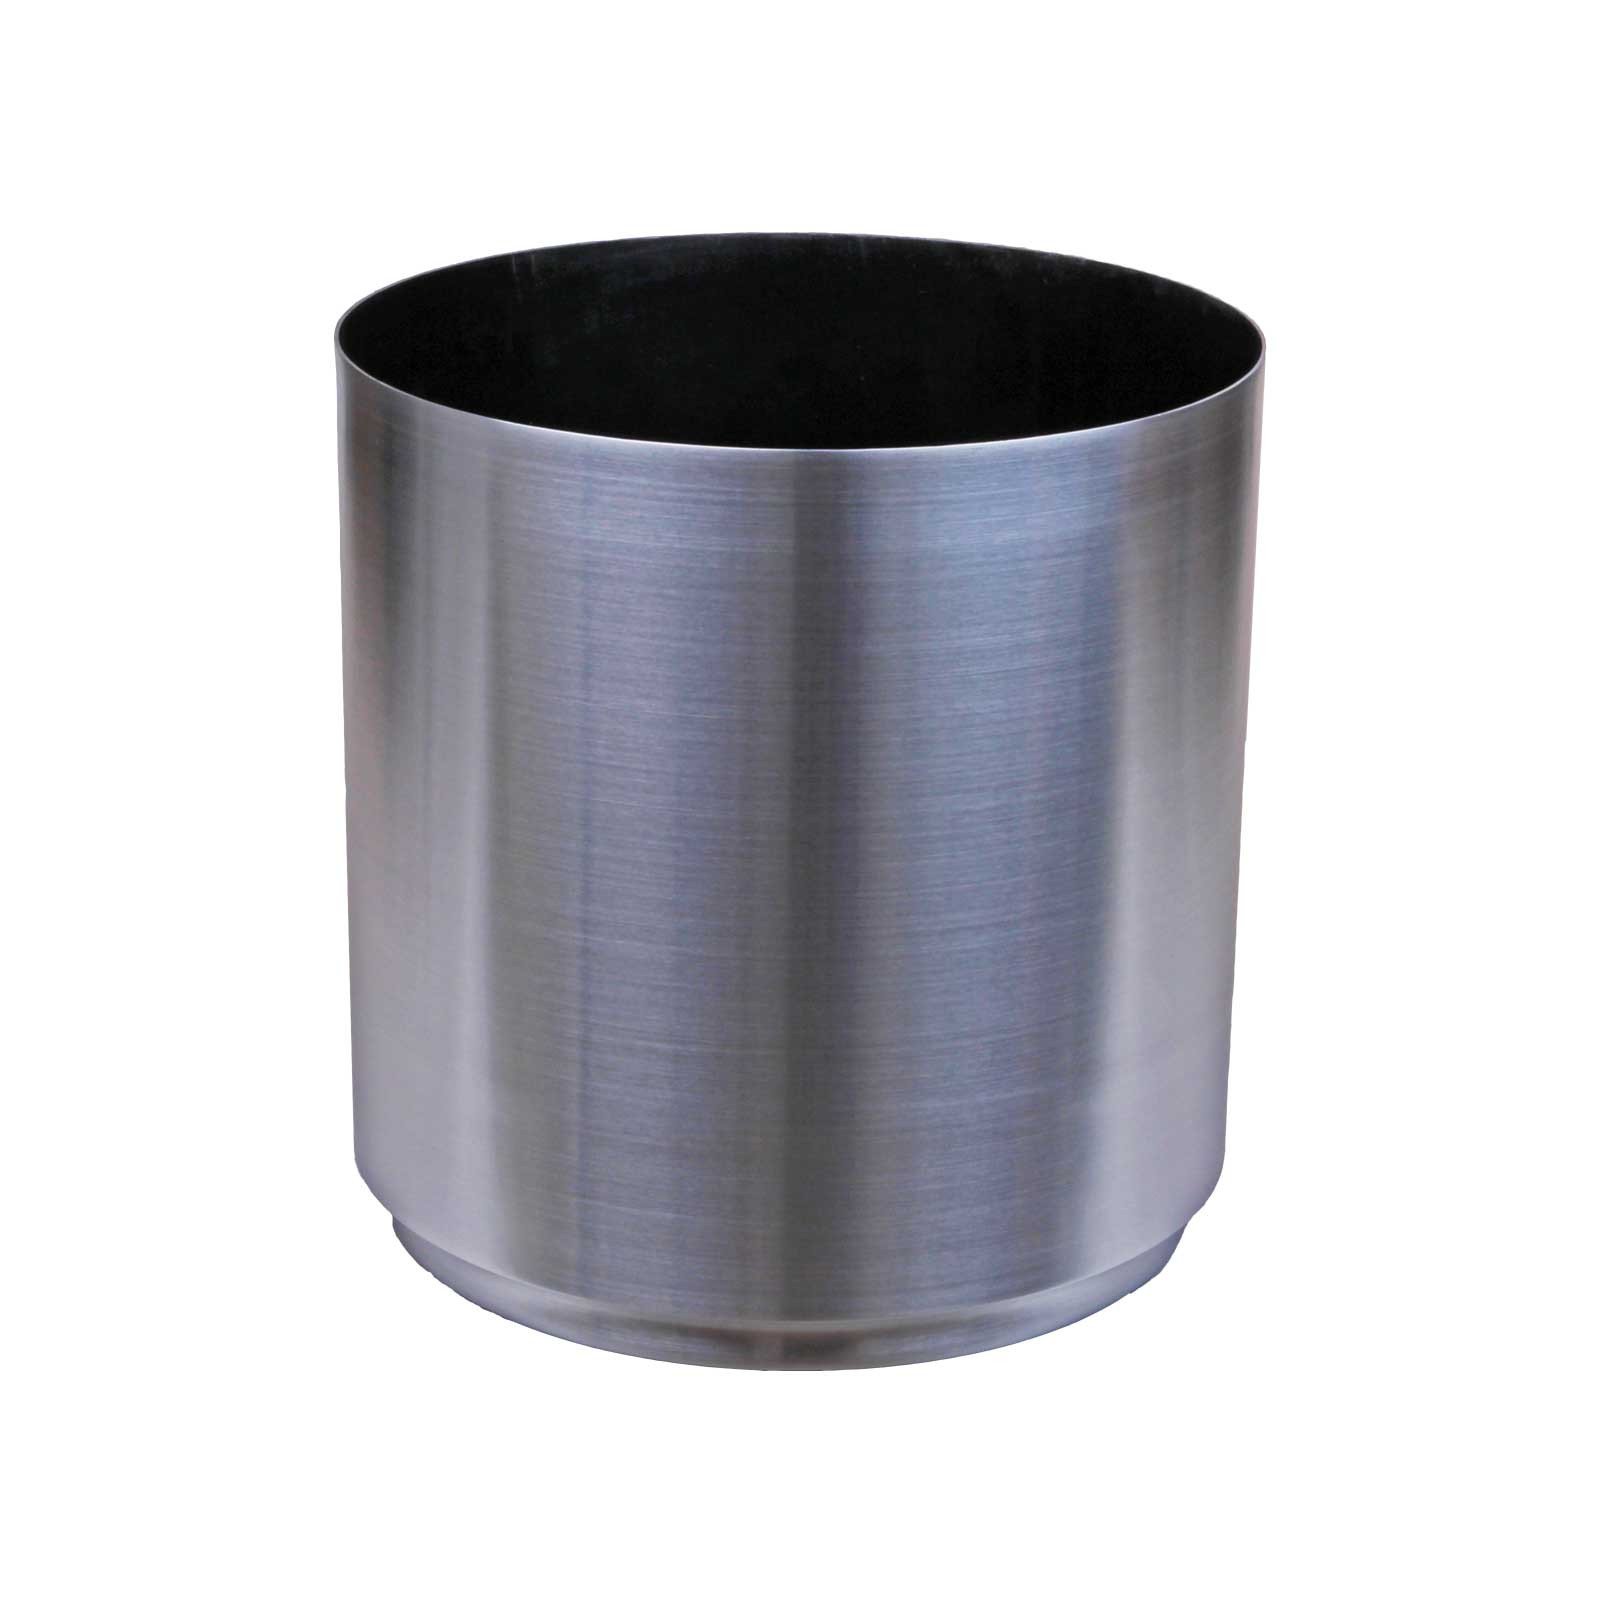 Oso Polar Small Aluminum Cylinder Planter